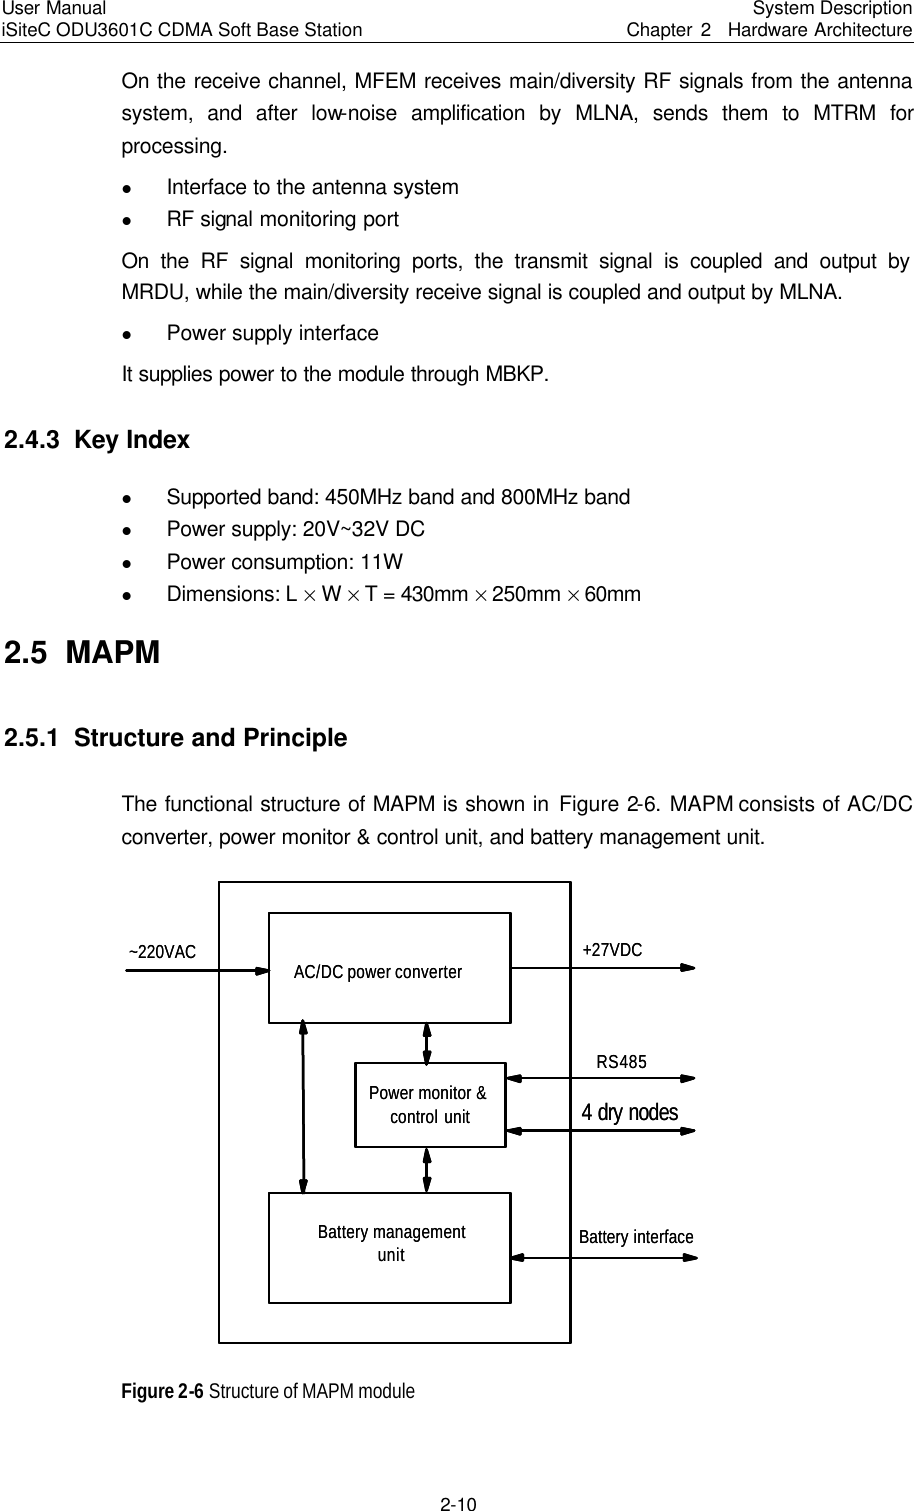 Page 26 of Huawei Technologies ODU3601C-800 CDMA Base Station User Manual 2